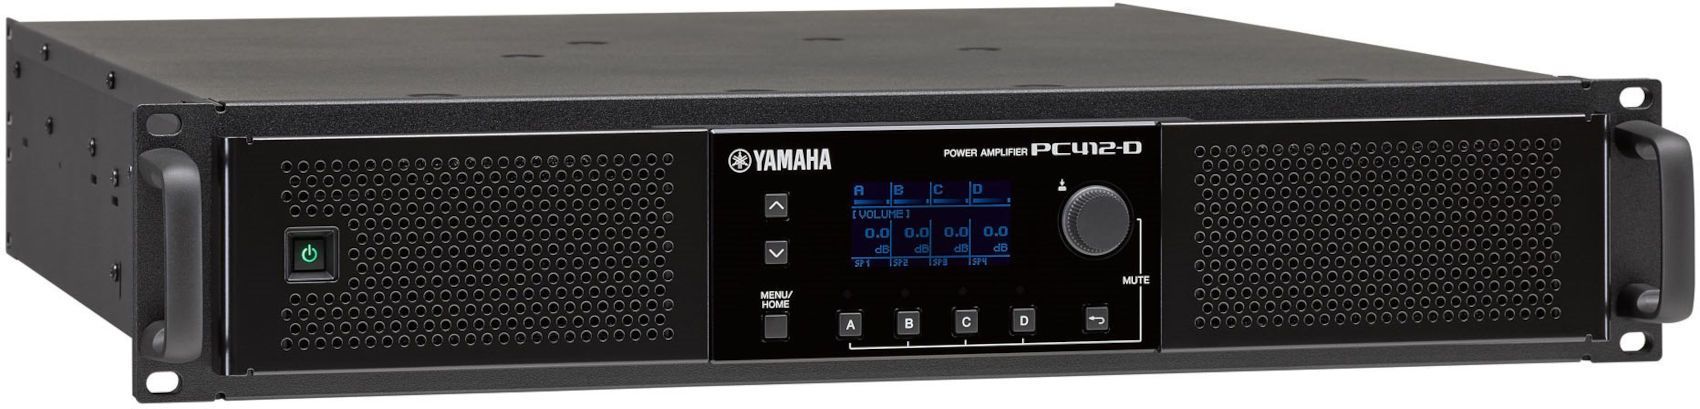 Yamaha PC412-D - фото 3